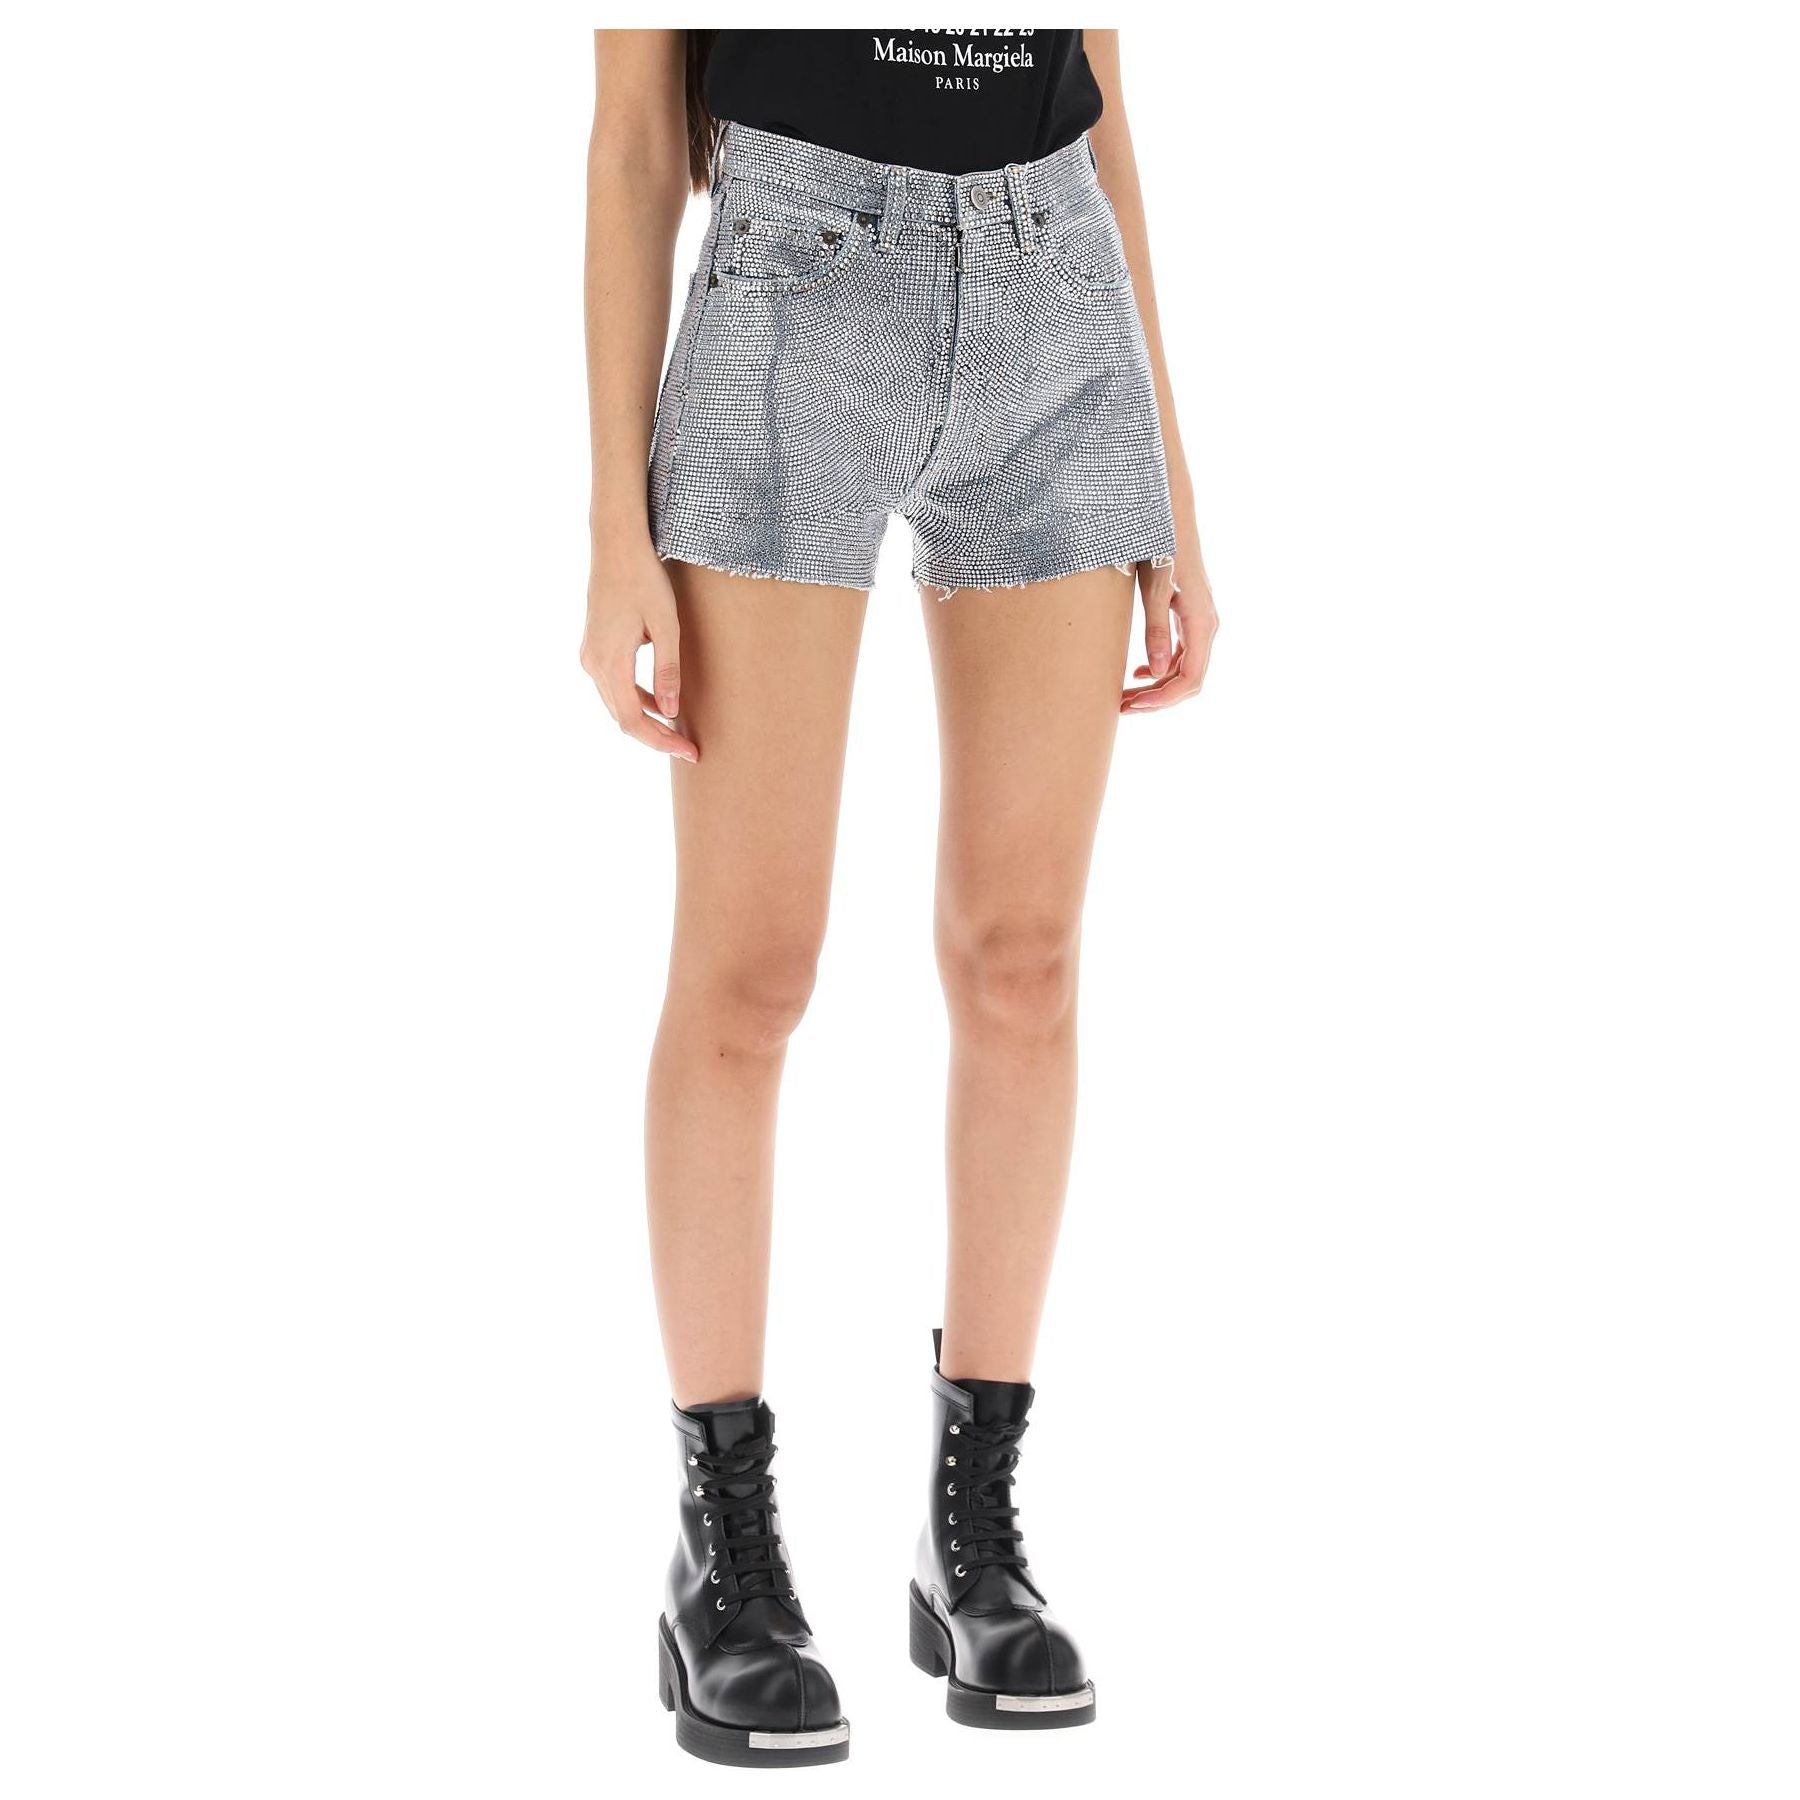 Shorts In Rhinestone Studded Denim